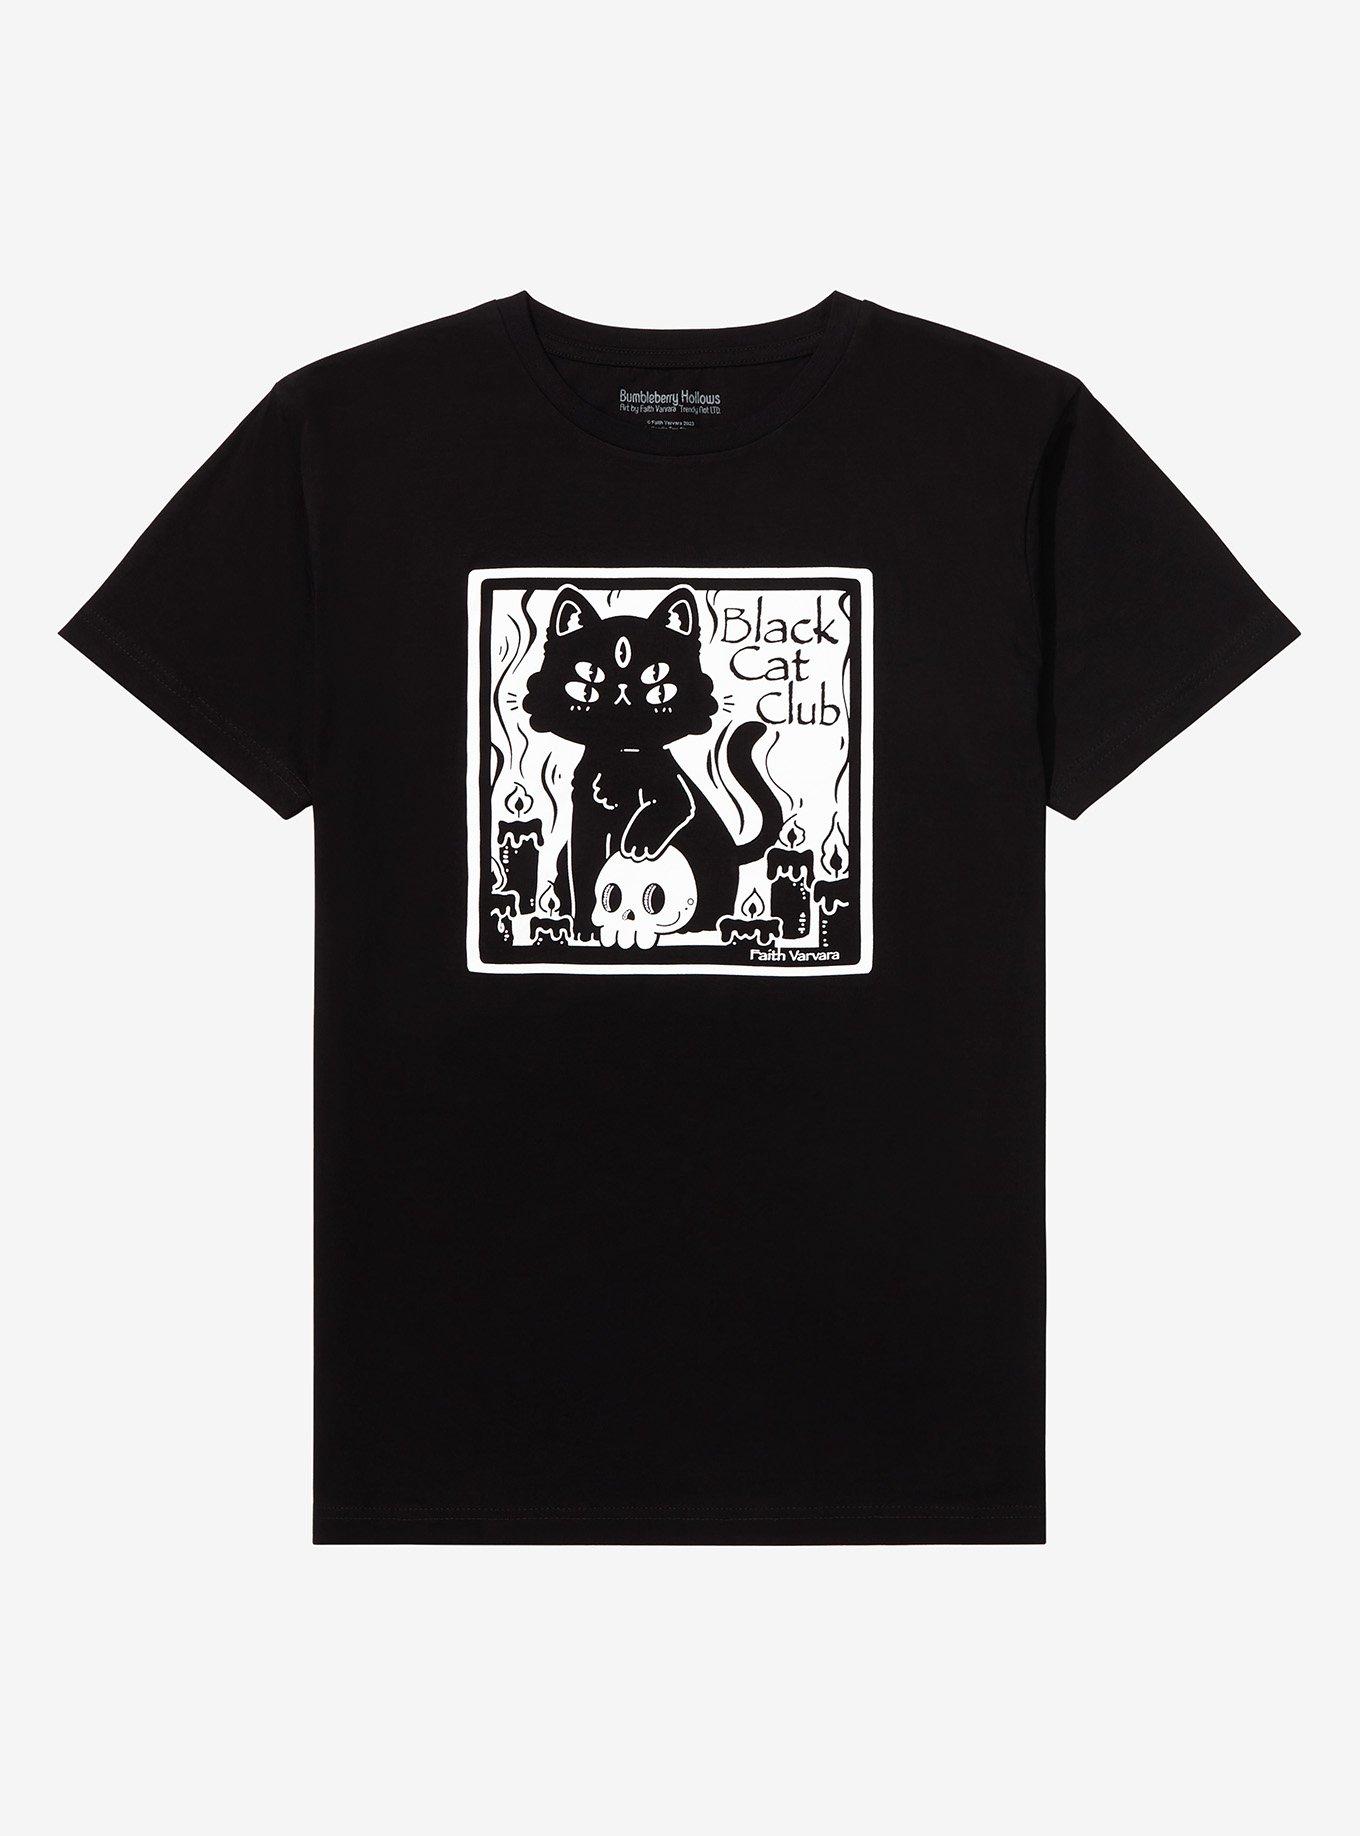 Bumbleberry Hollows Black Cat Club T-Shirt By Faith Varvara | Hot Topic